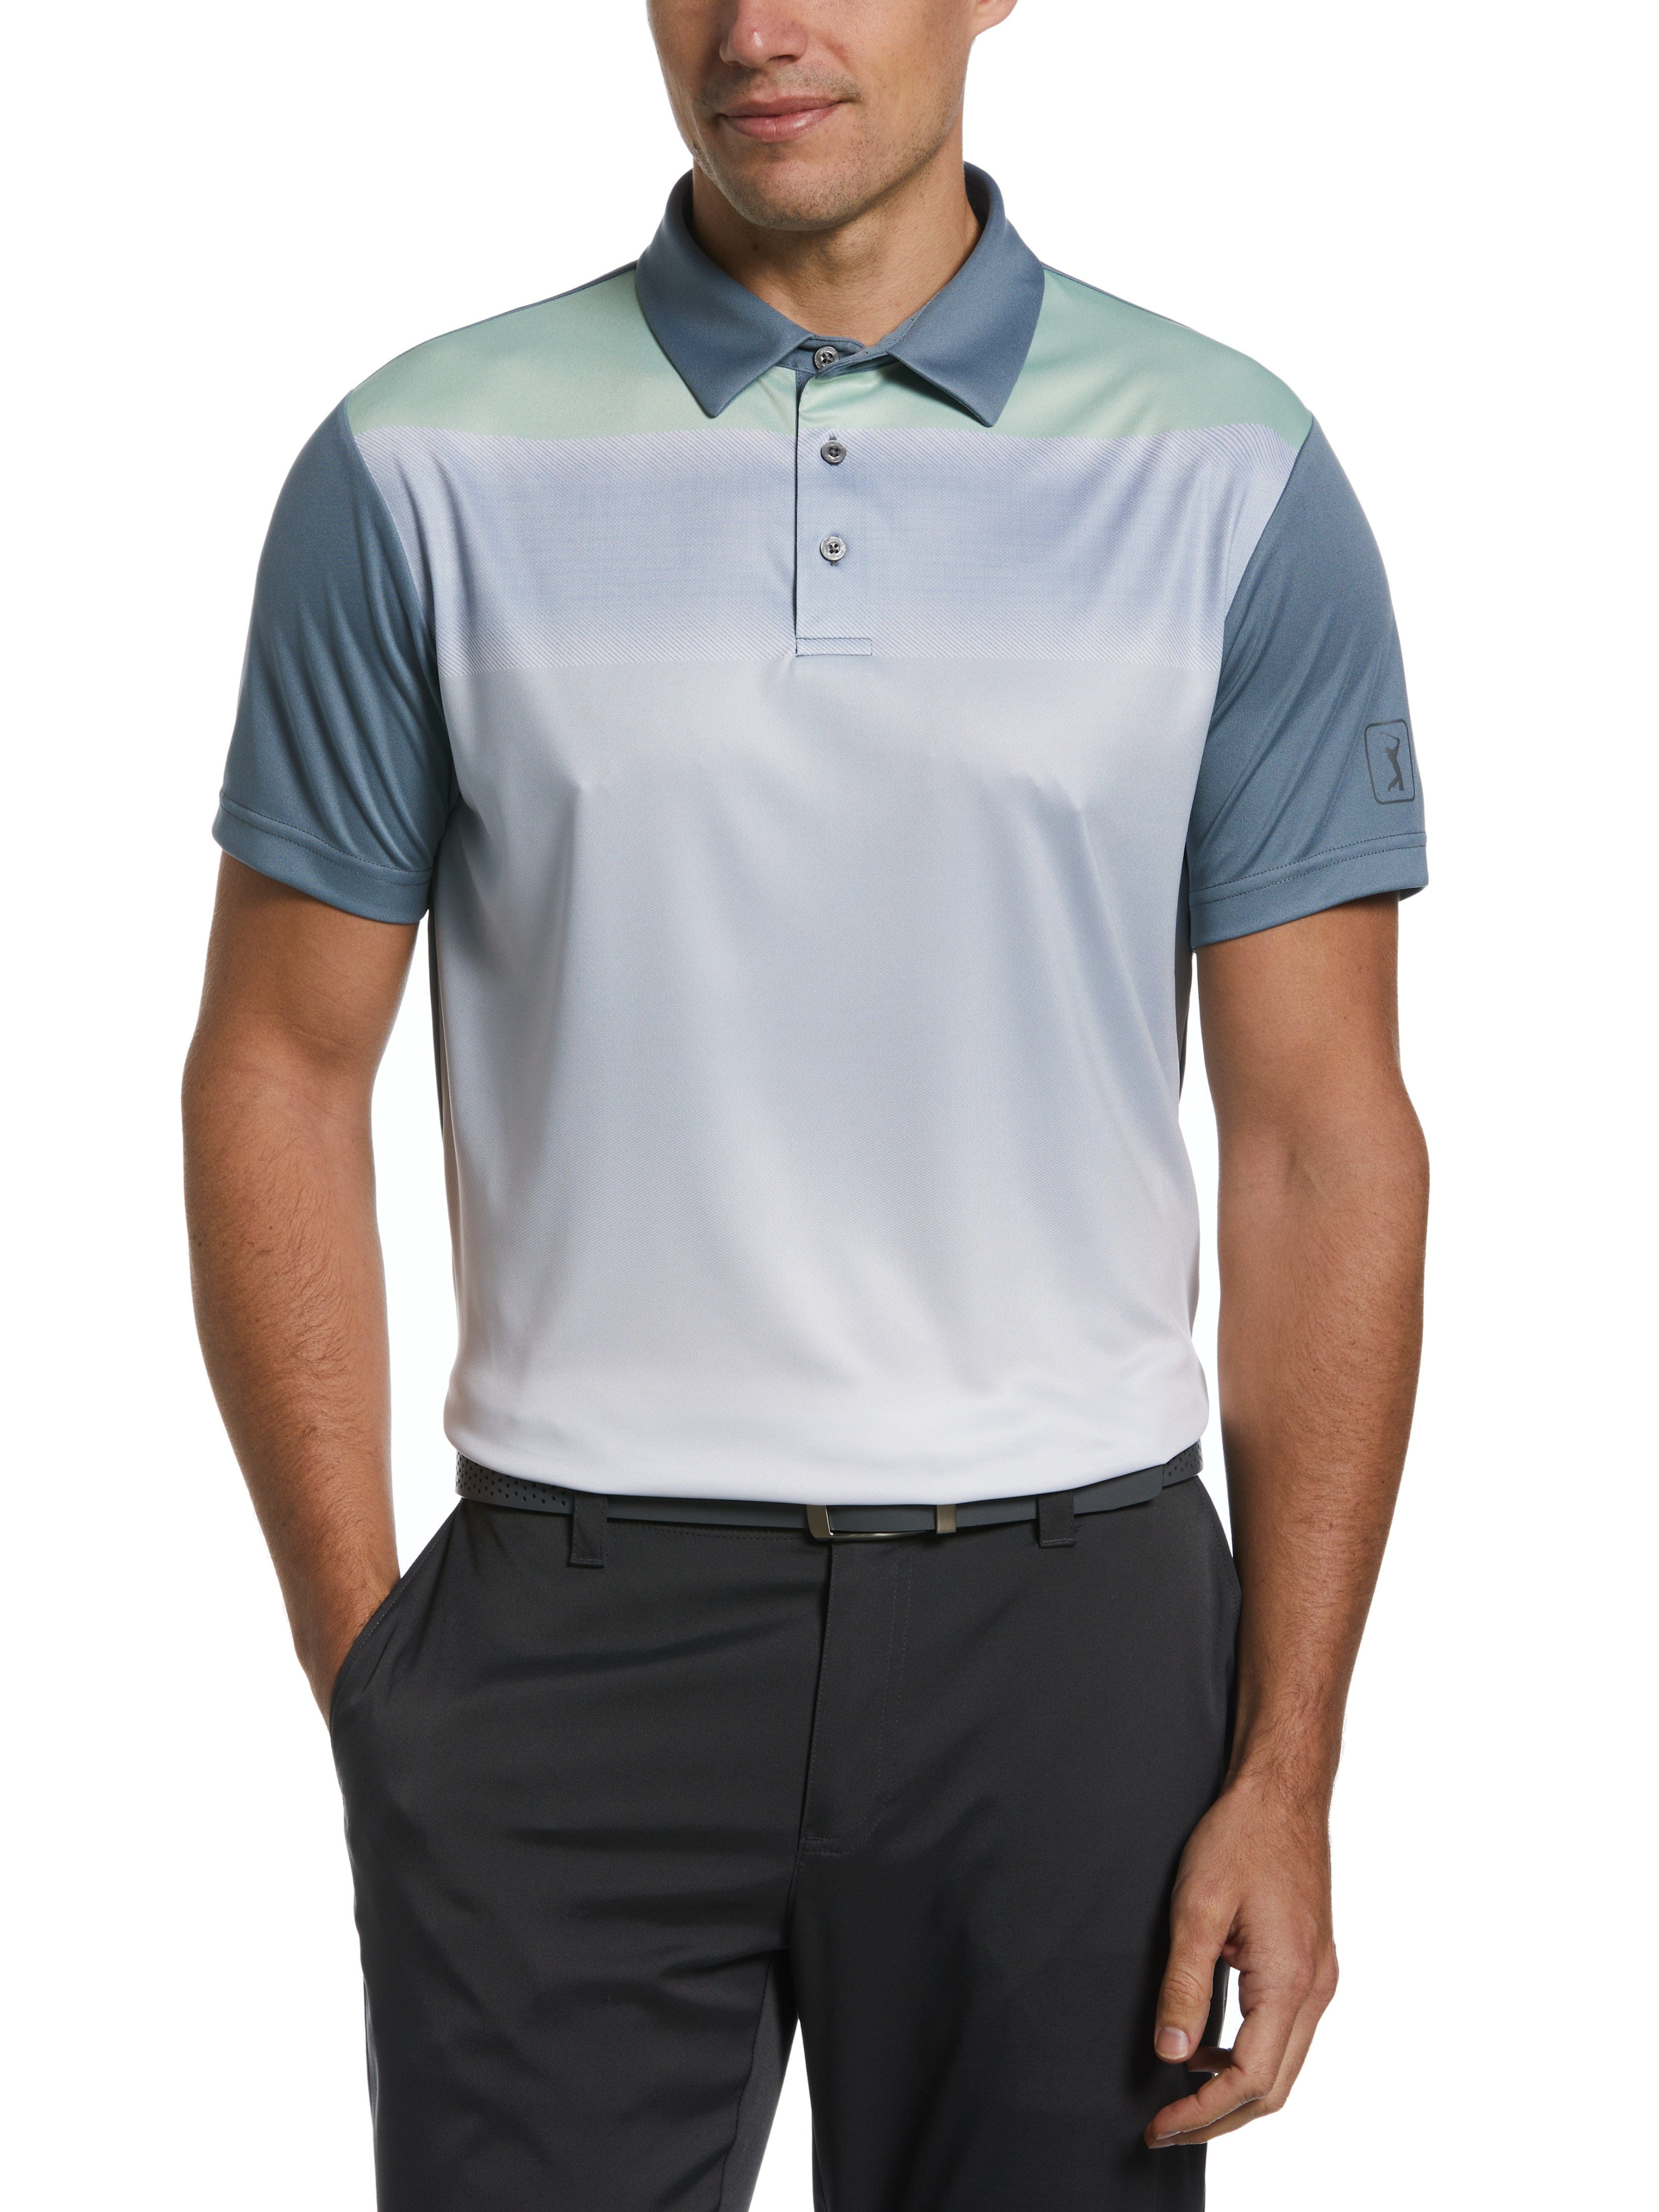 PGA TOUR Apparel Mens Blocked Print Golf Polo Shirt, Size Medium, Tradewinds Gray, 100% Polyester | Golf Apparel Shop